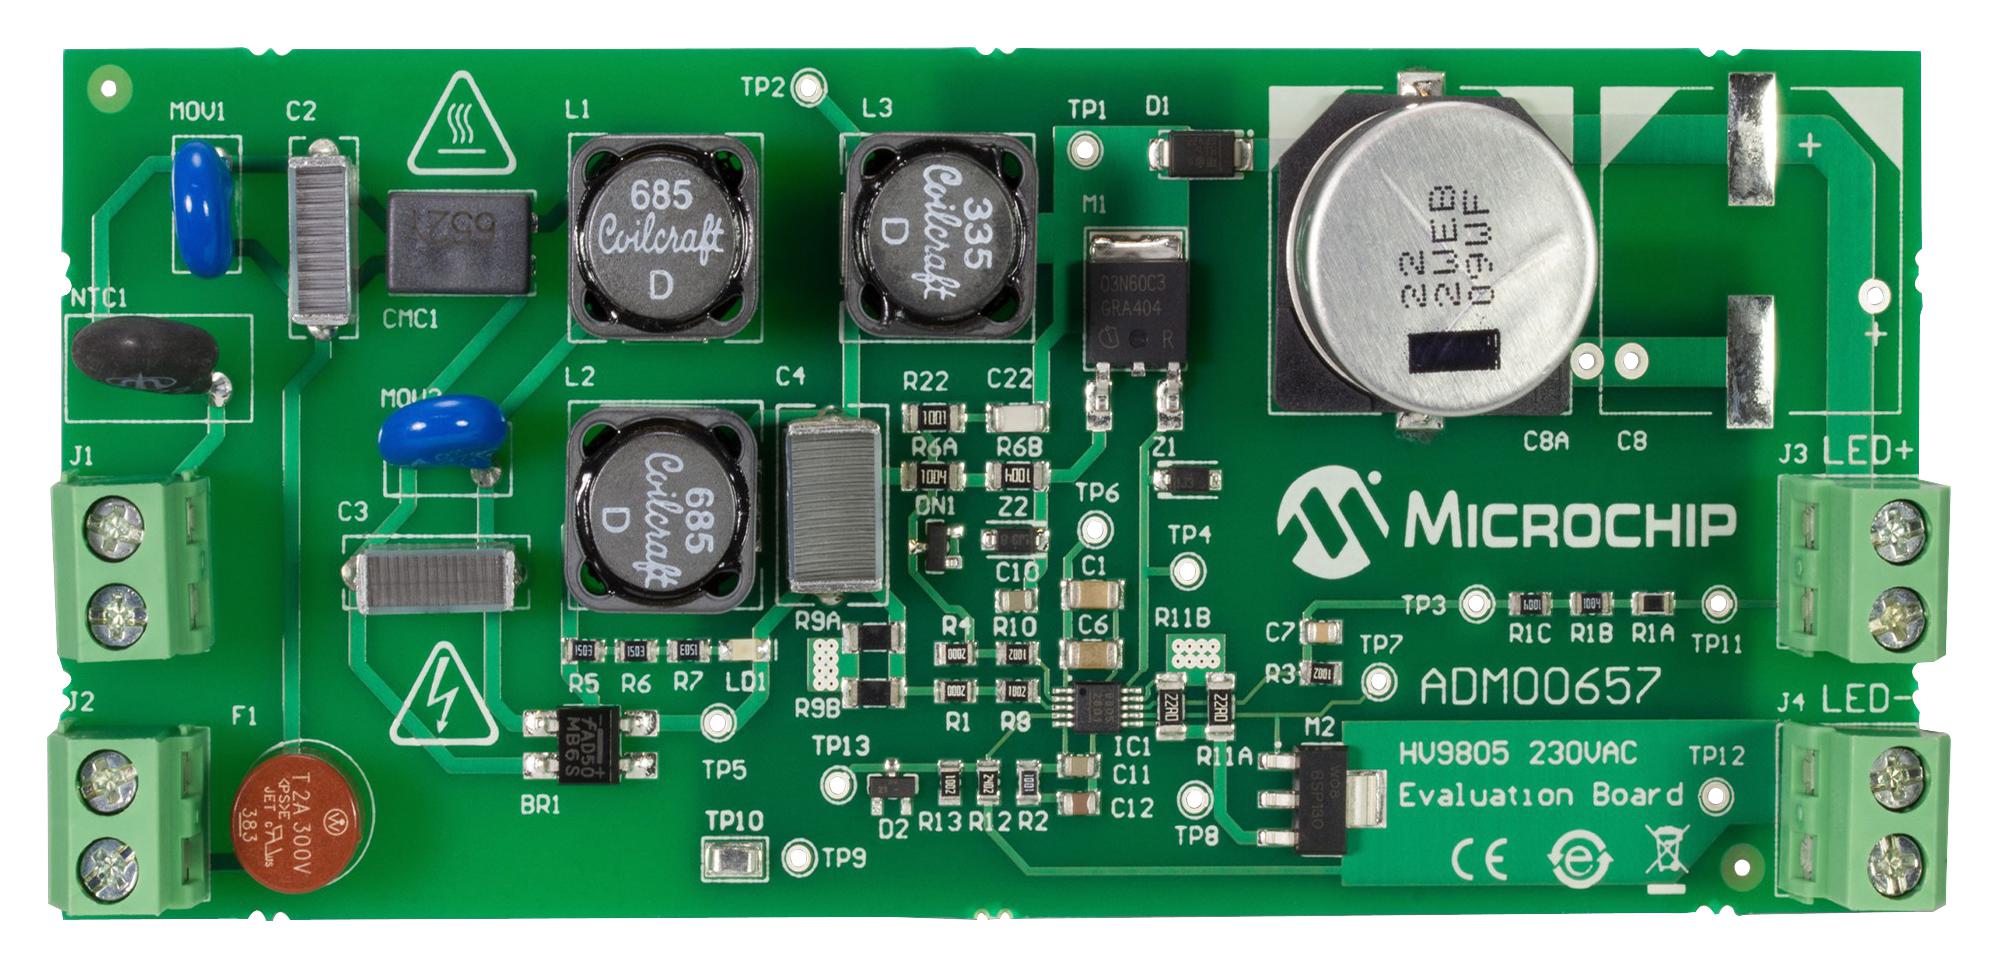 ADM00657 EVAL BOARD, HV9805 OFF-LINE LED DRIVER MICROCHIP